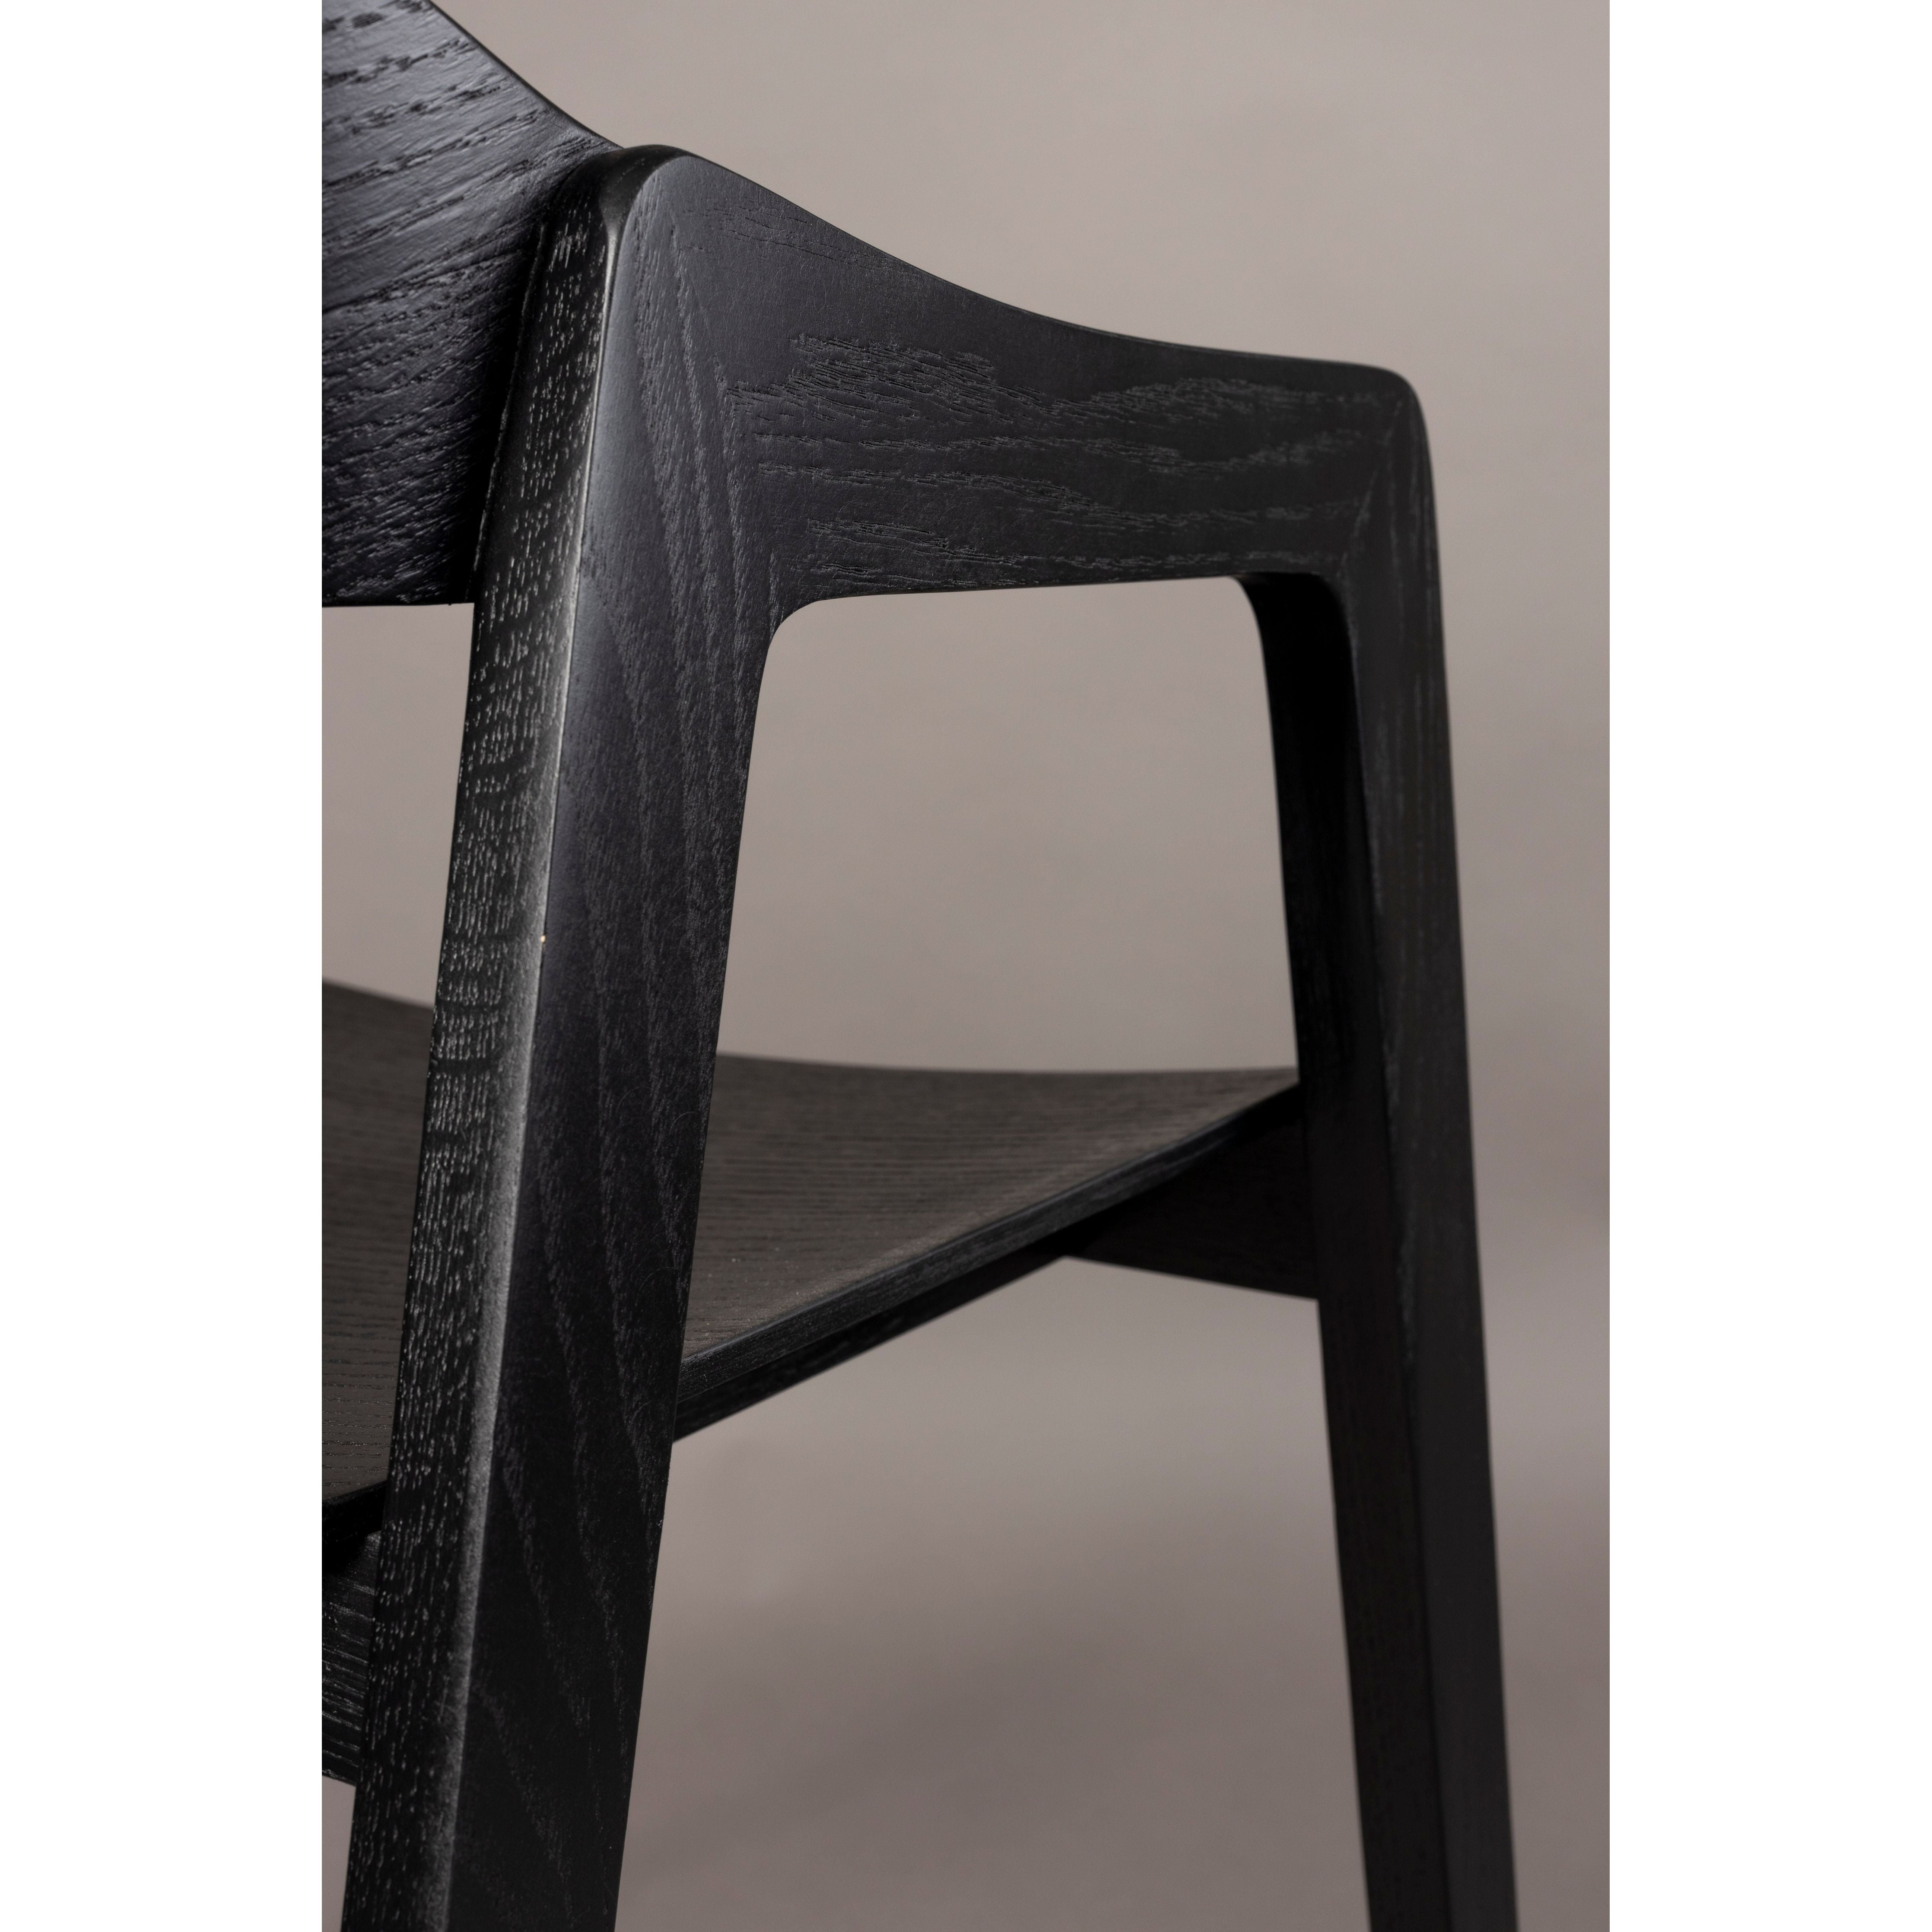 Chair westlake black